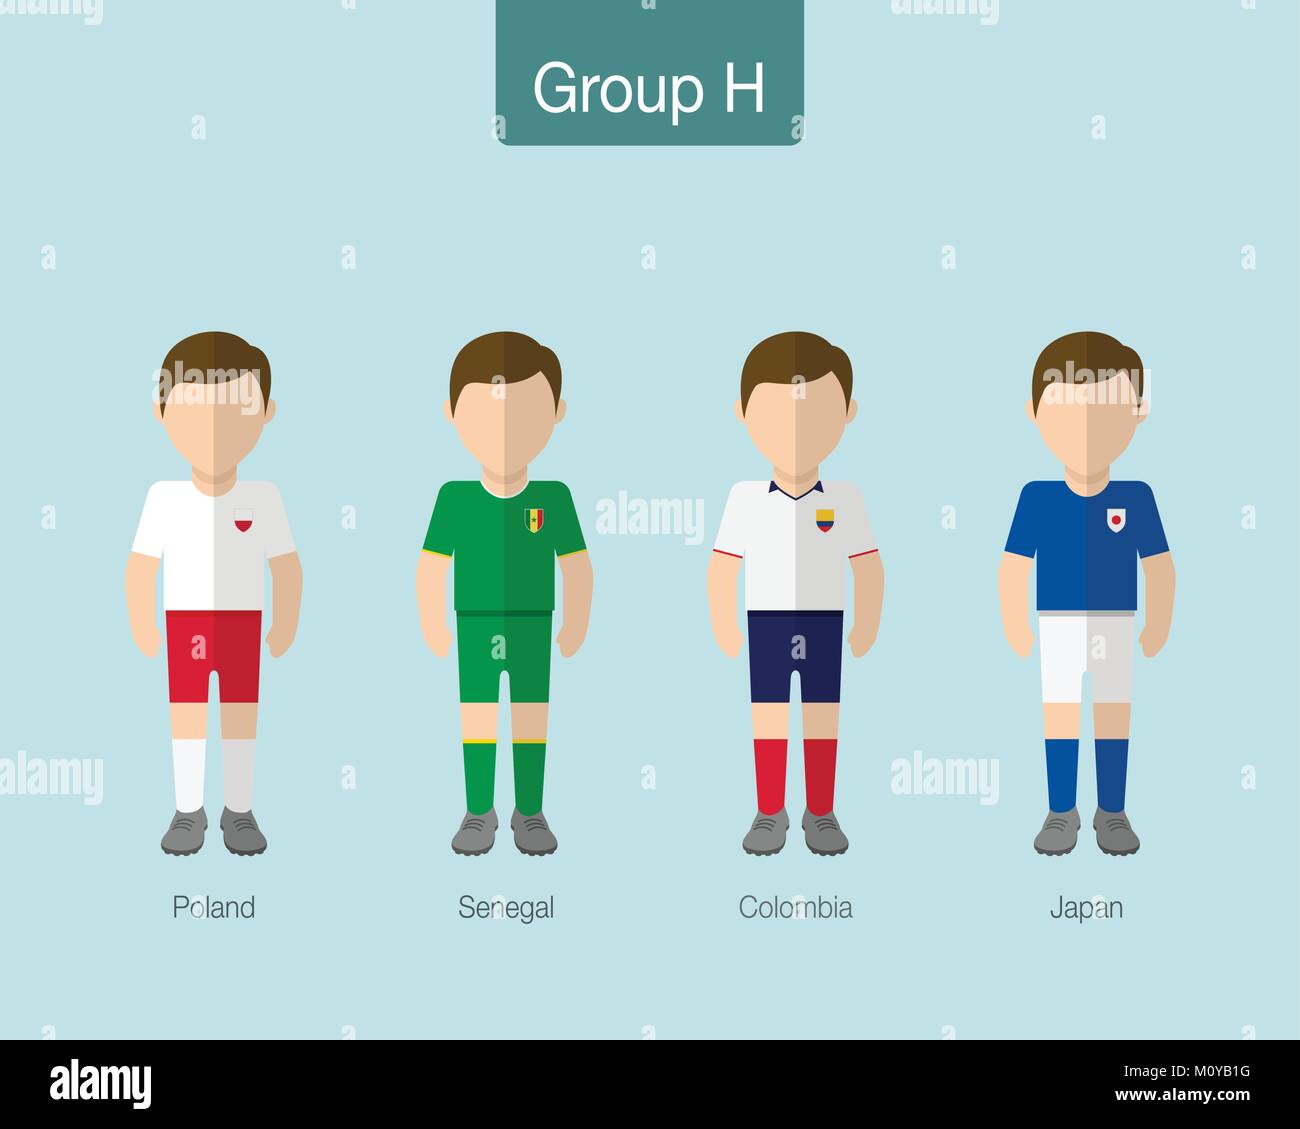 2018 Soccer or football team uniform. Group H with POLAND, SENEGAL, COLOMBIA, JAPAN. Flat design. Vector illustration. Stock Vector